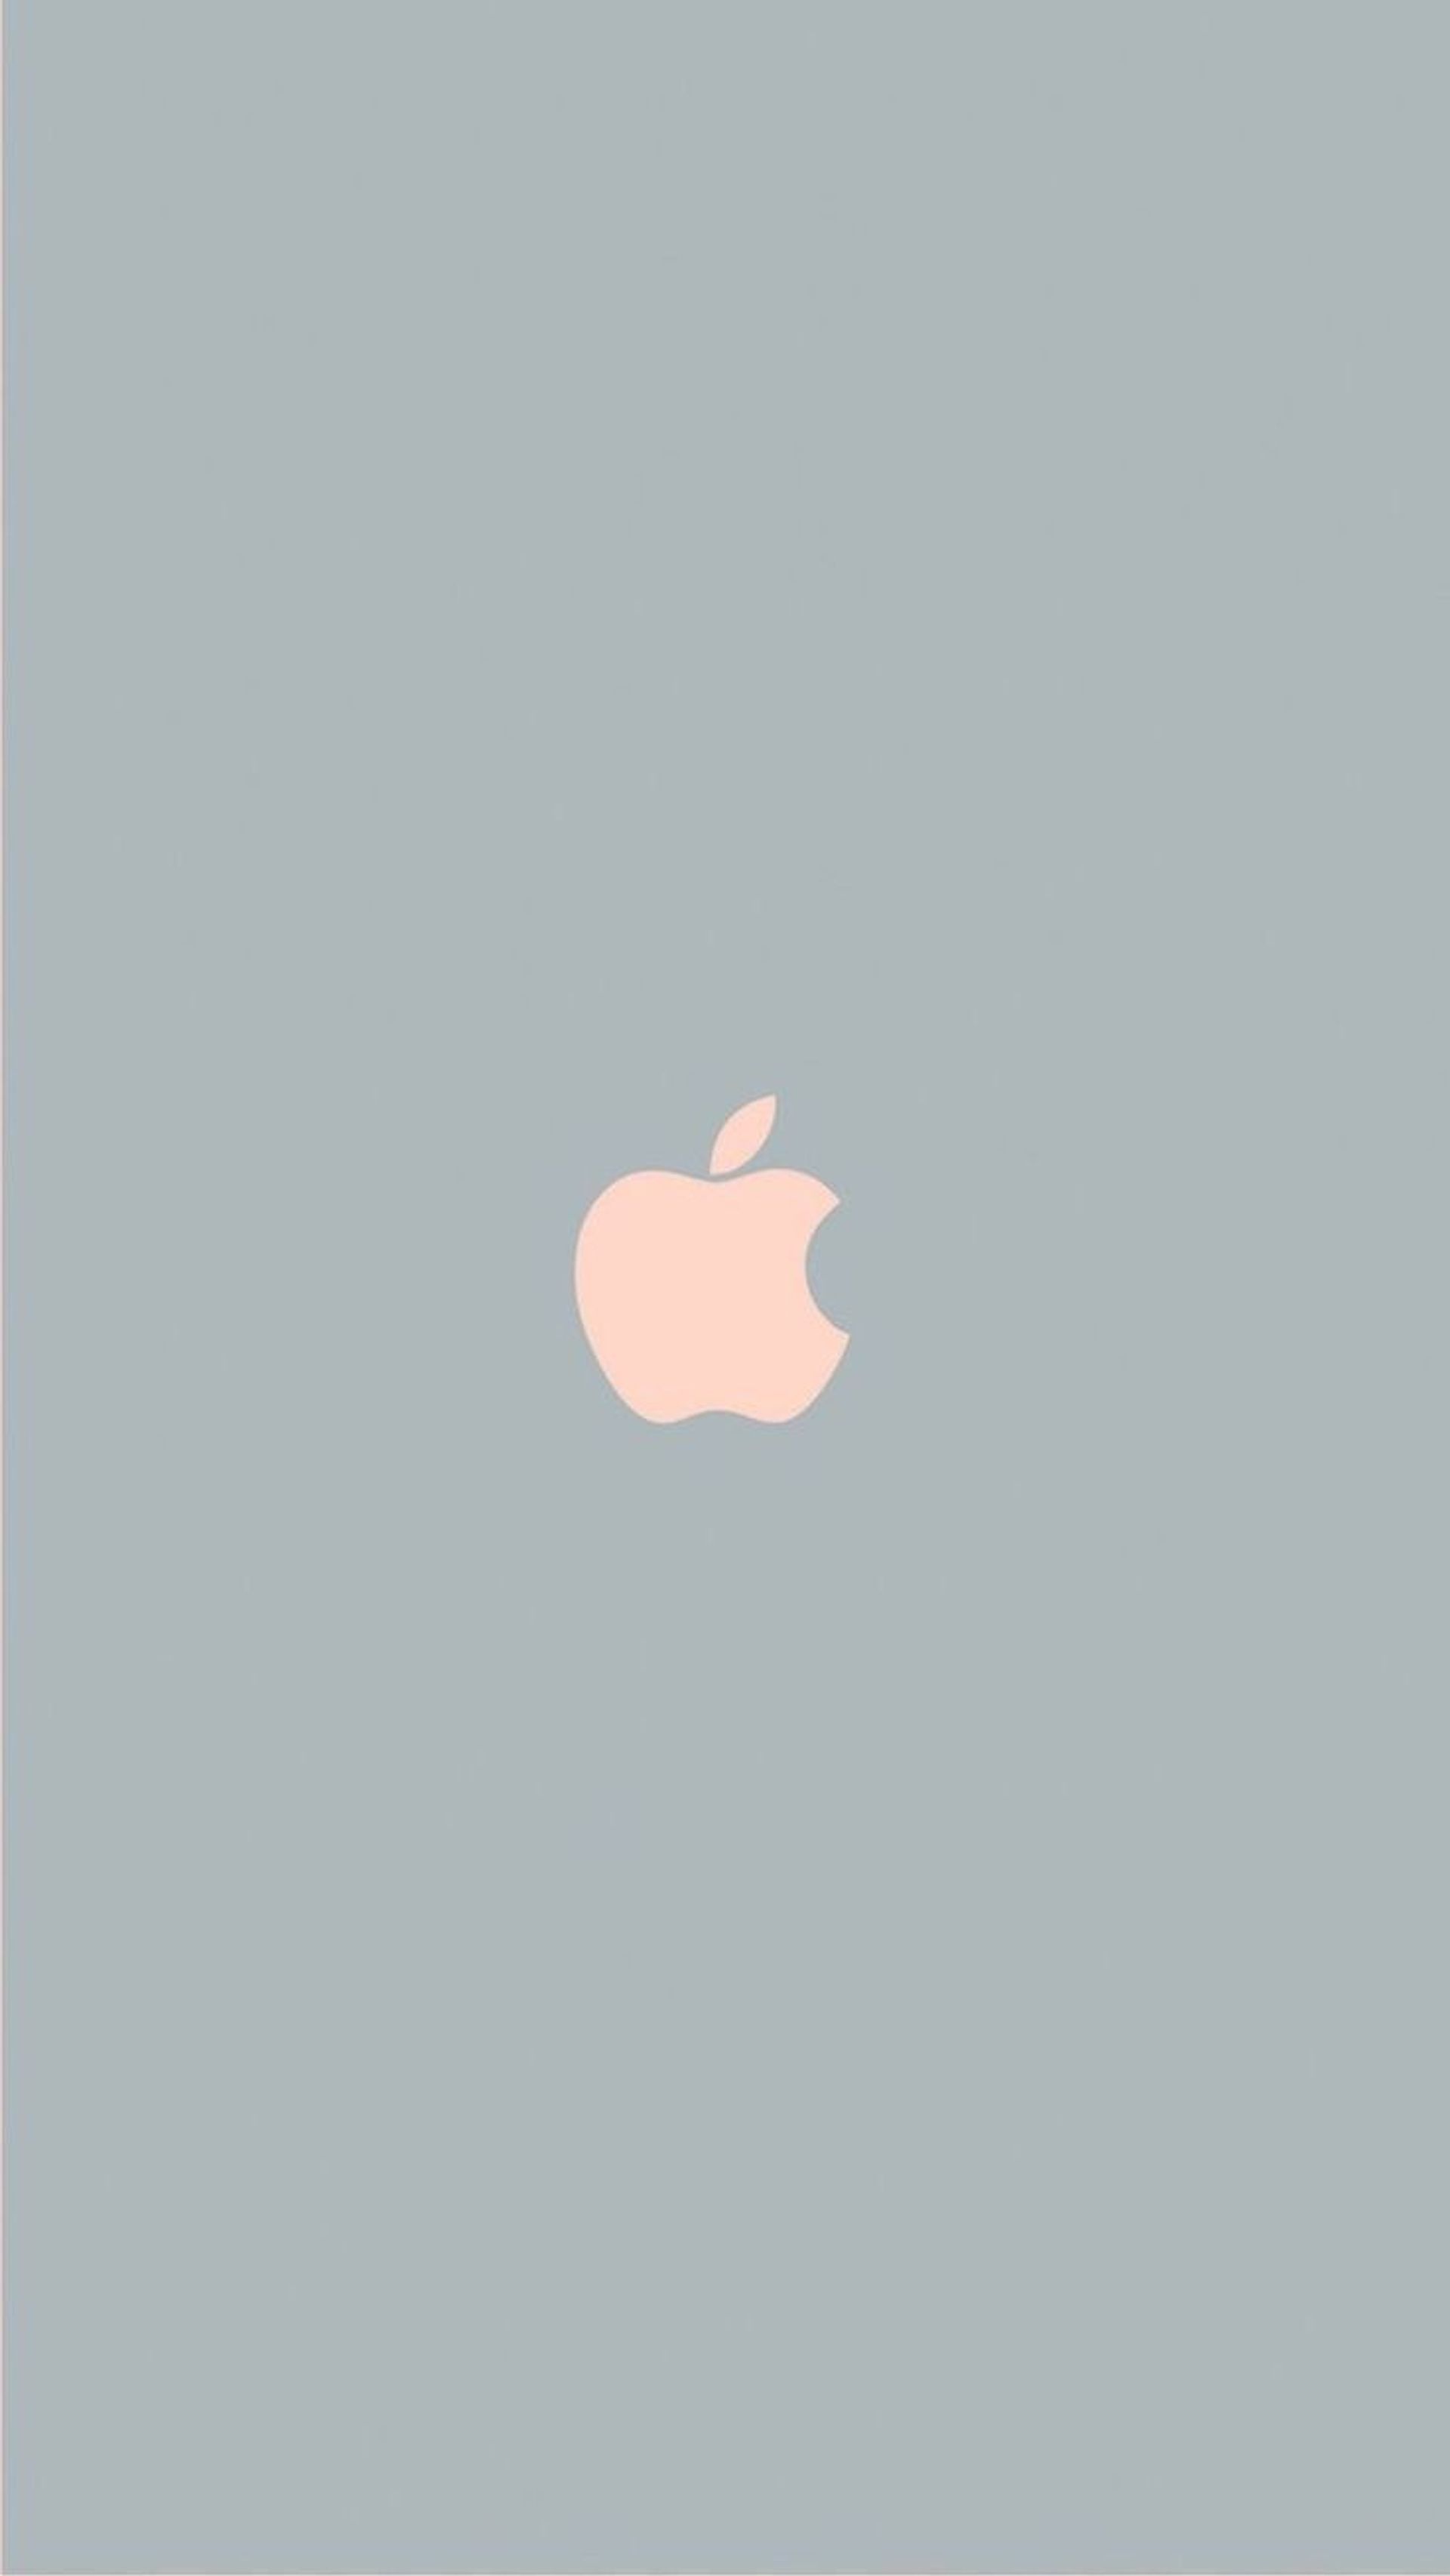 Log In. Apple logo wallpaper iphone, Apple wallpaper iphone